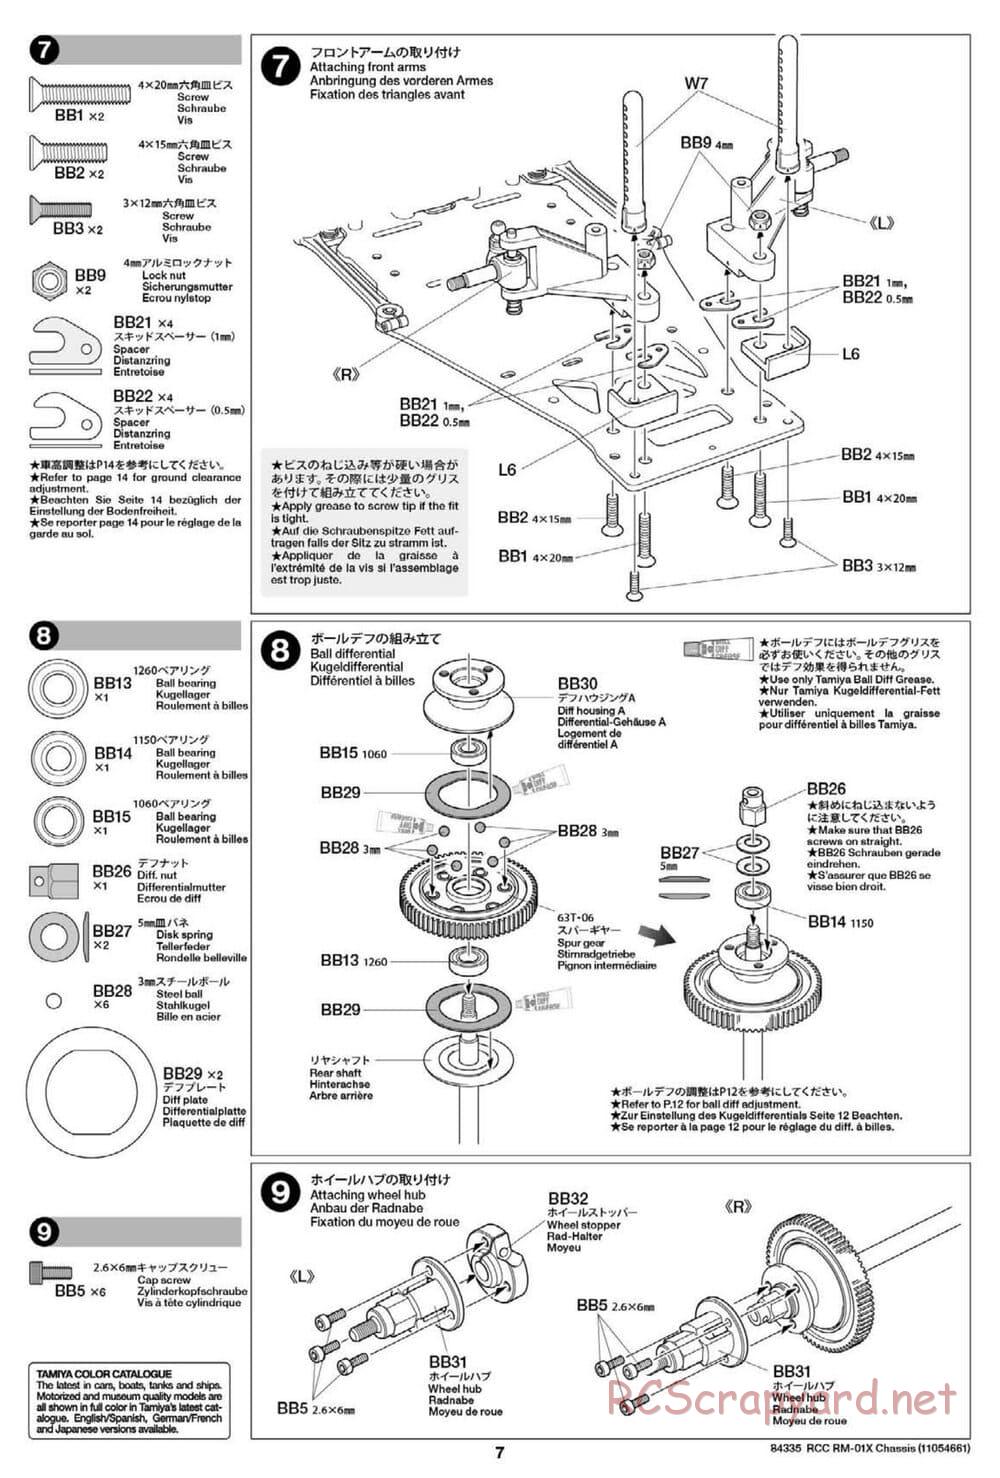 Tamiya - RM-01X Chassis - Manual - Page 7